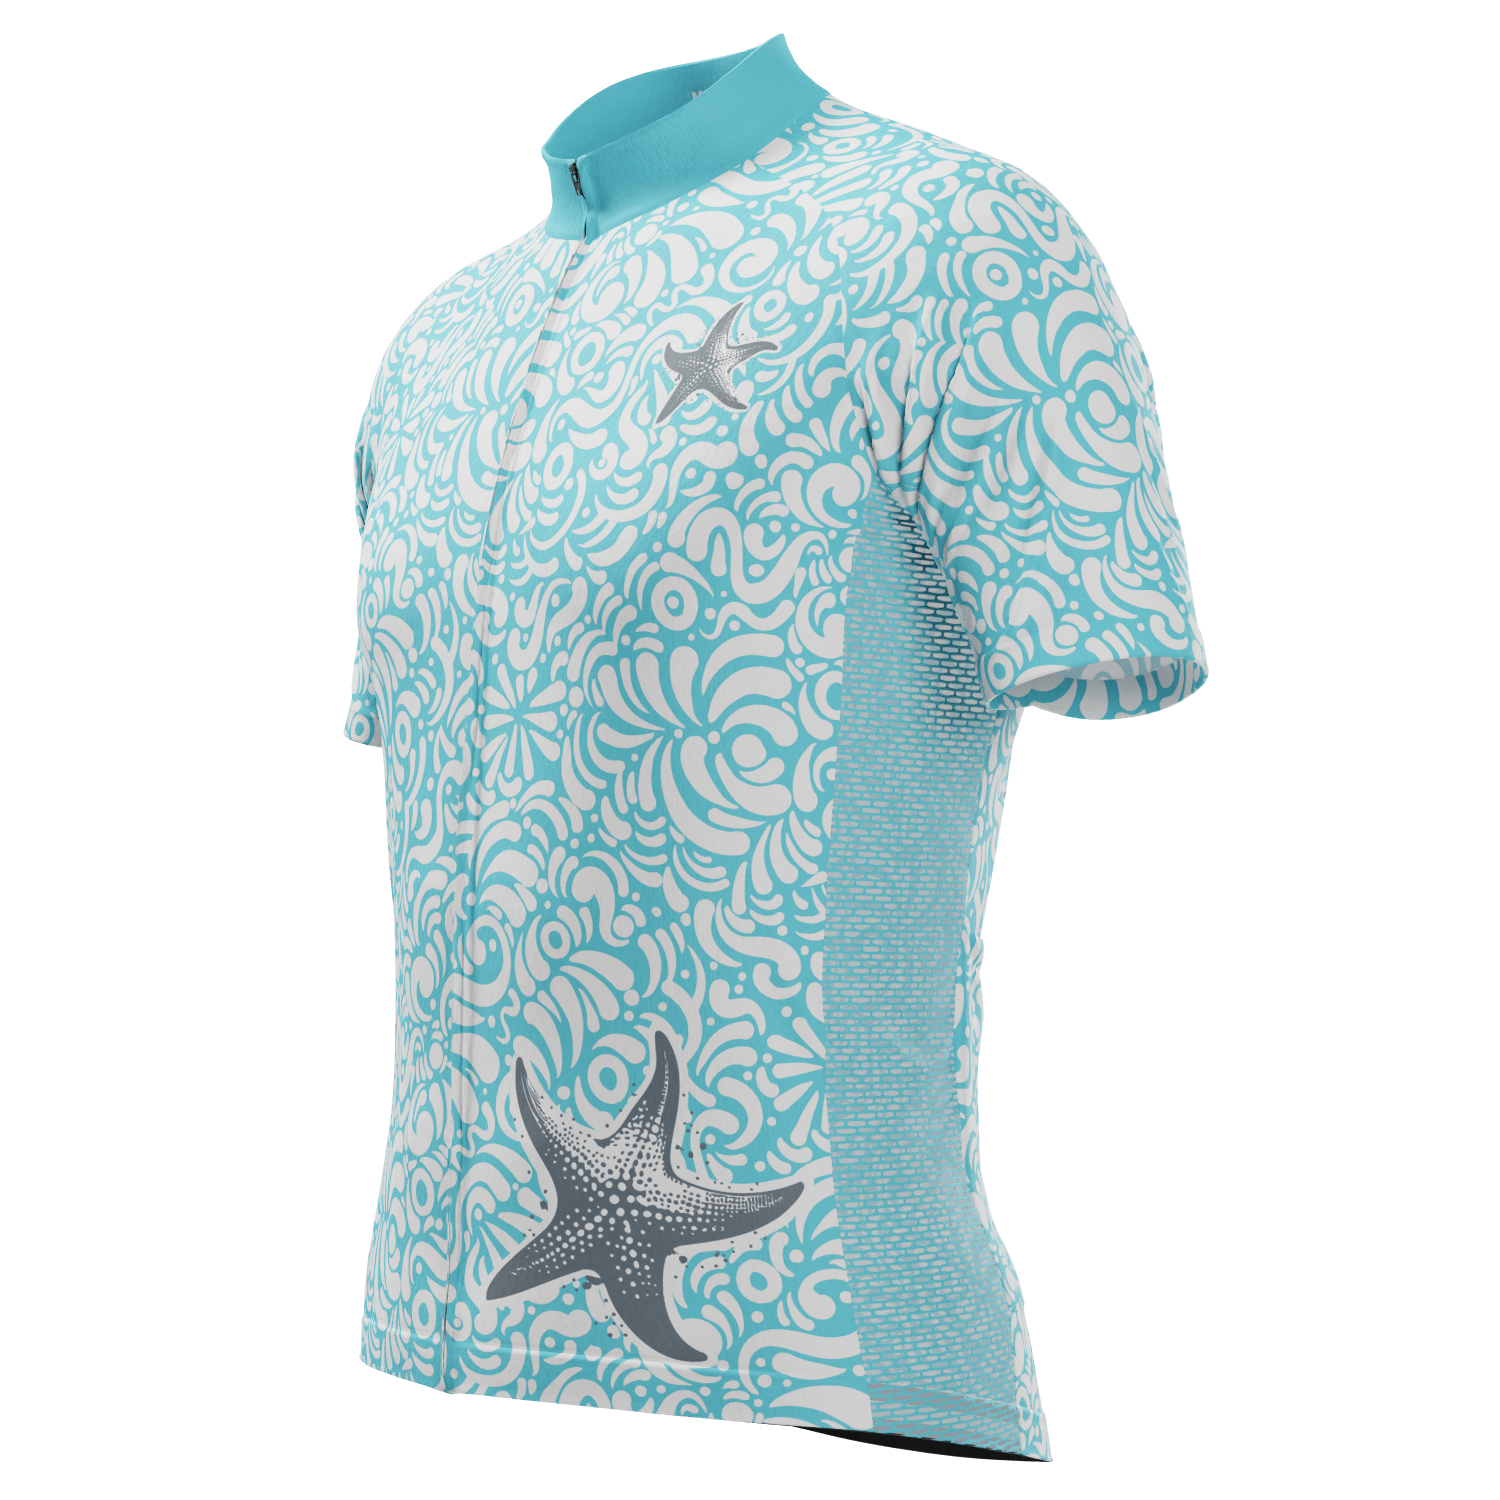 Men's Stellar Starfish Short Sleeve Cycling Jersey